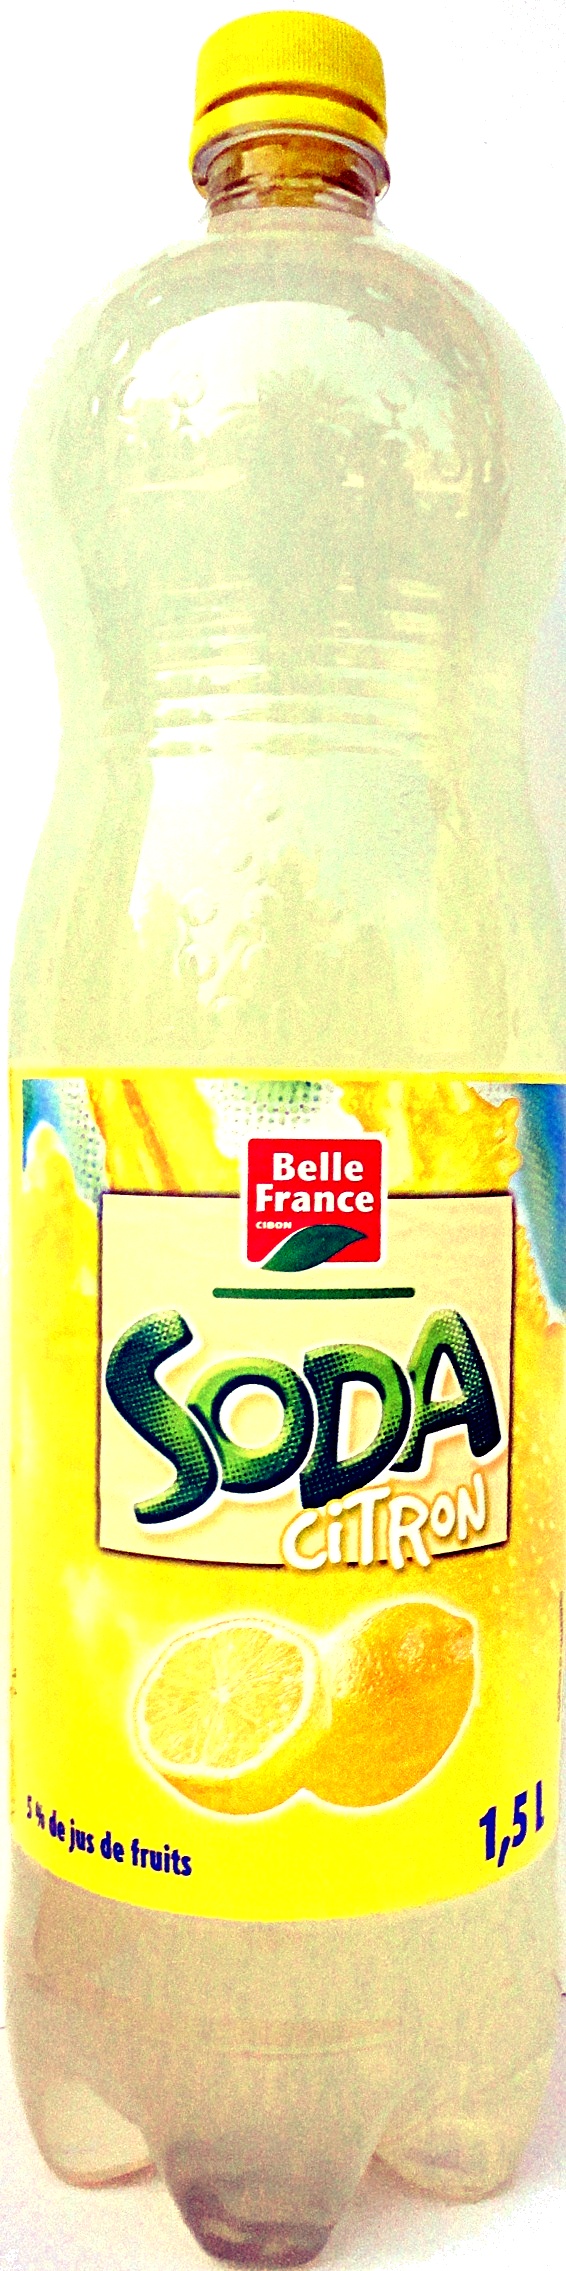 Soda Citron - Produkt - fr